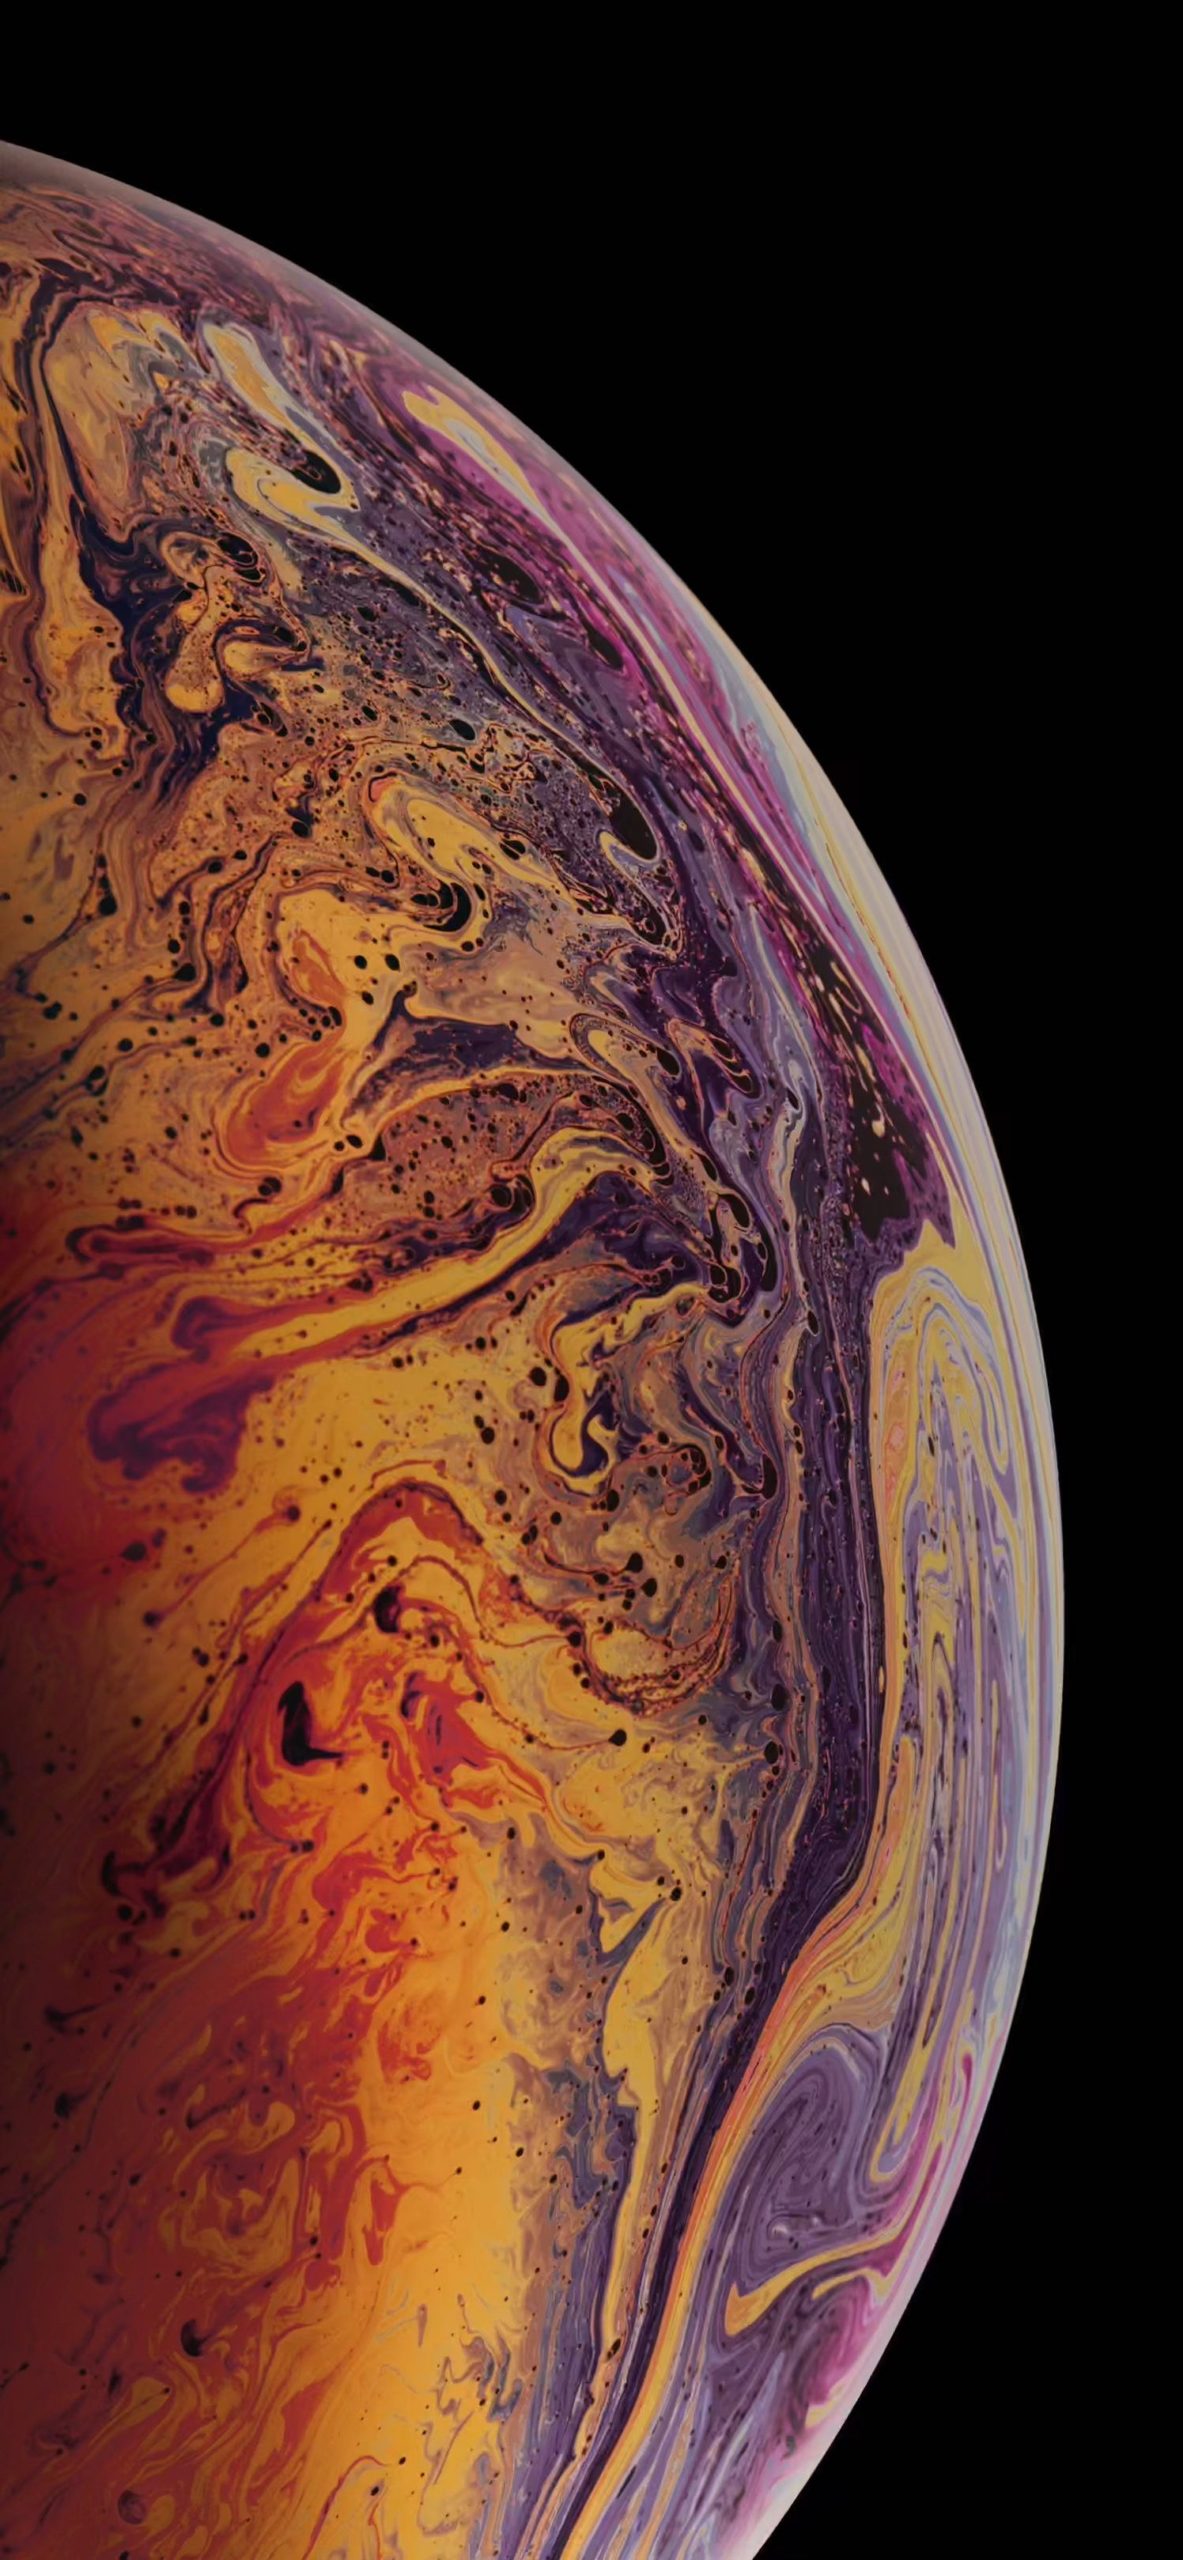 Download Iphone Xs Max Earth Wallpaper 4k